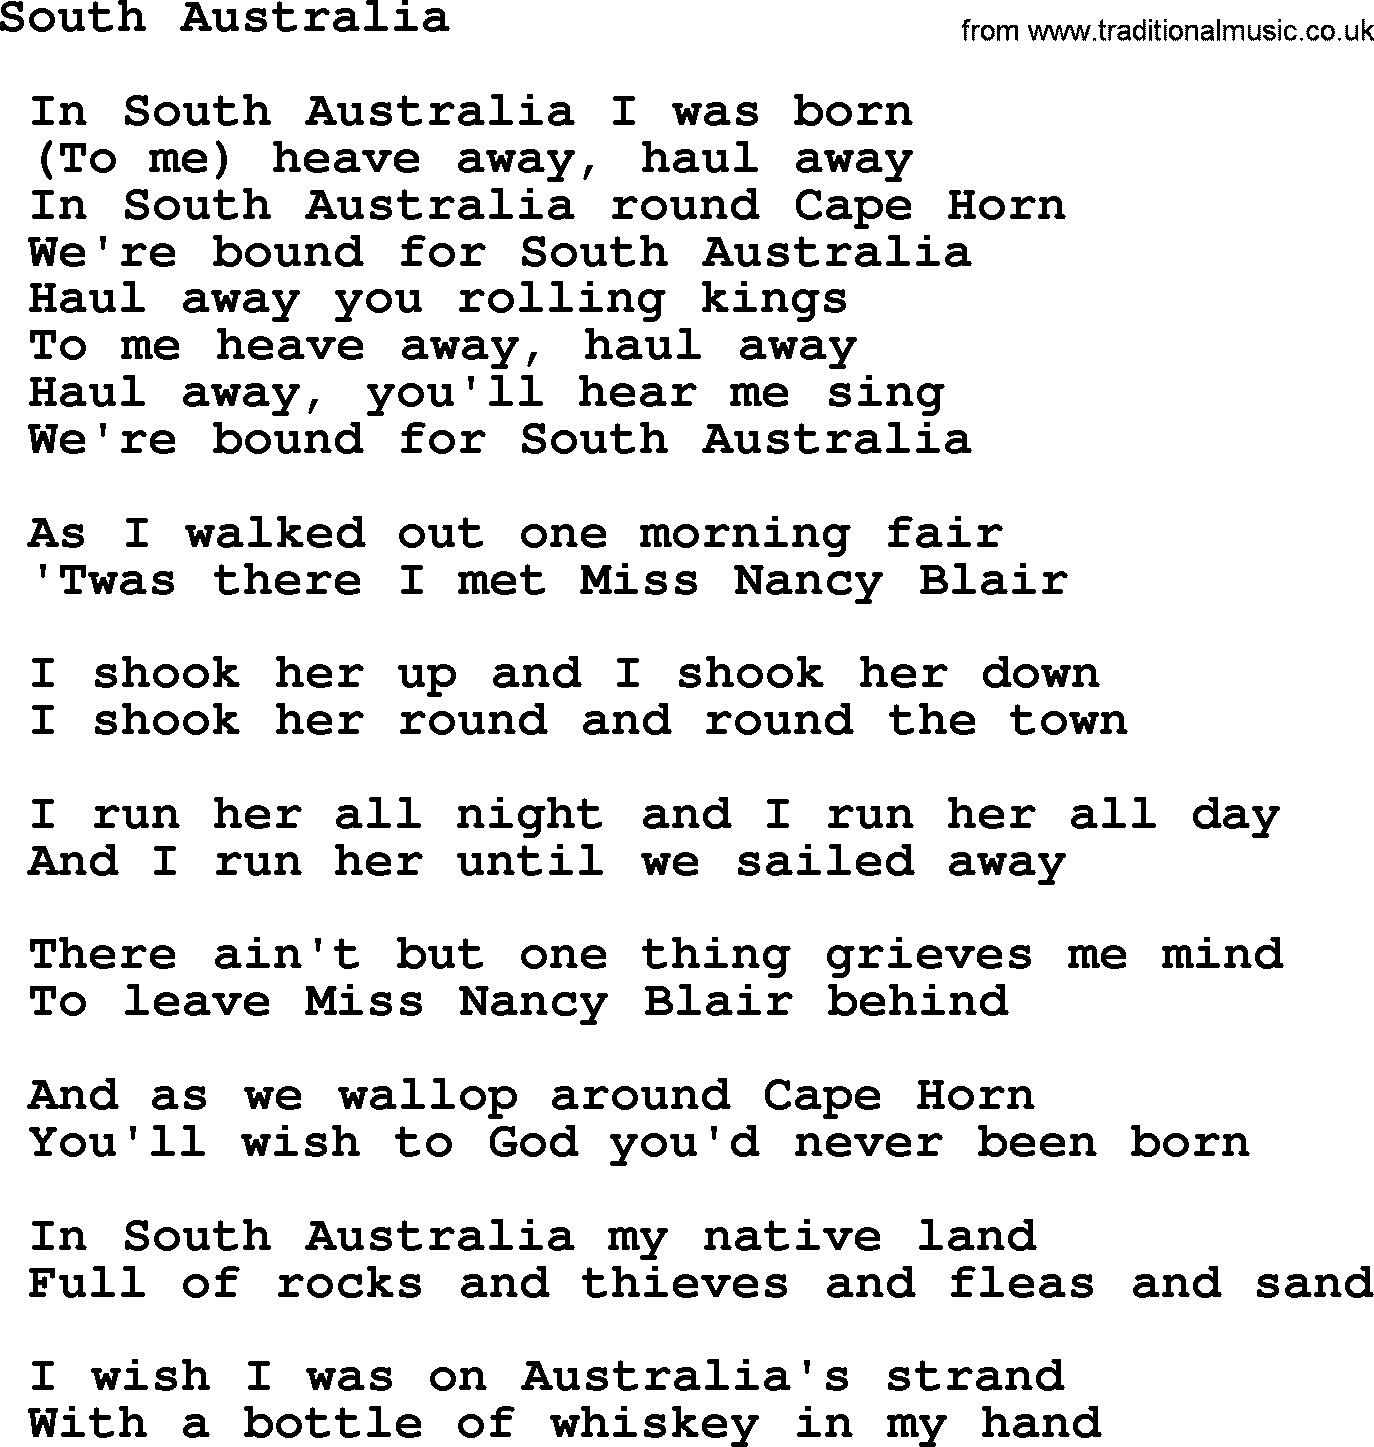 Sea Song or Shantie: South Australia, lyrics